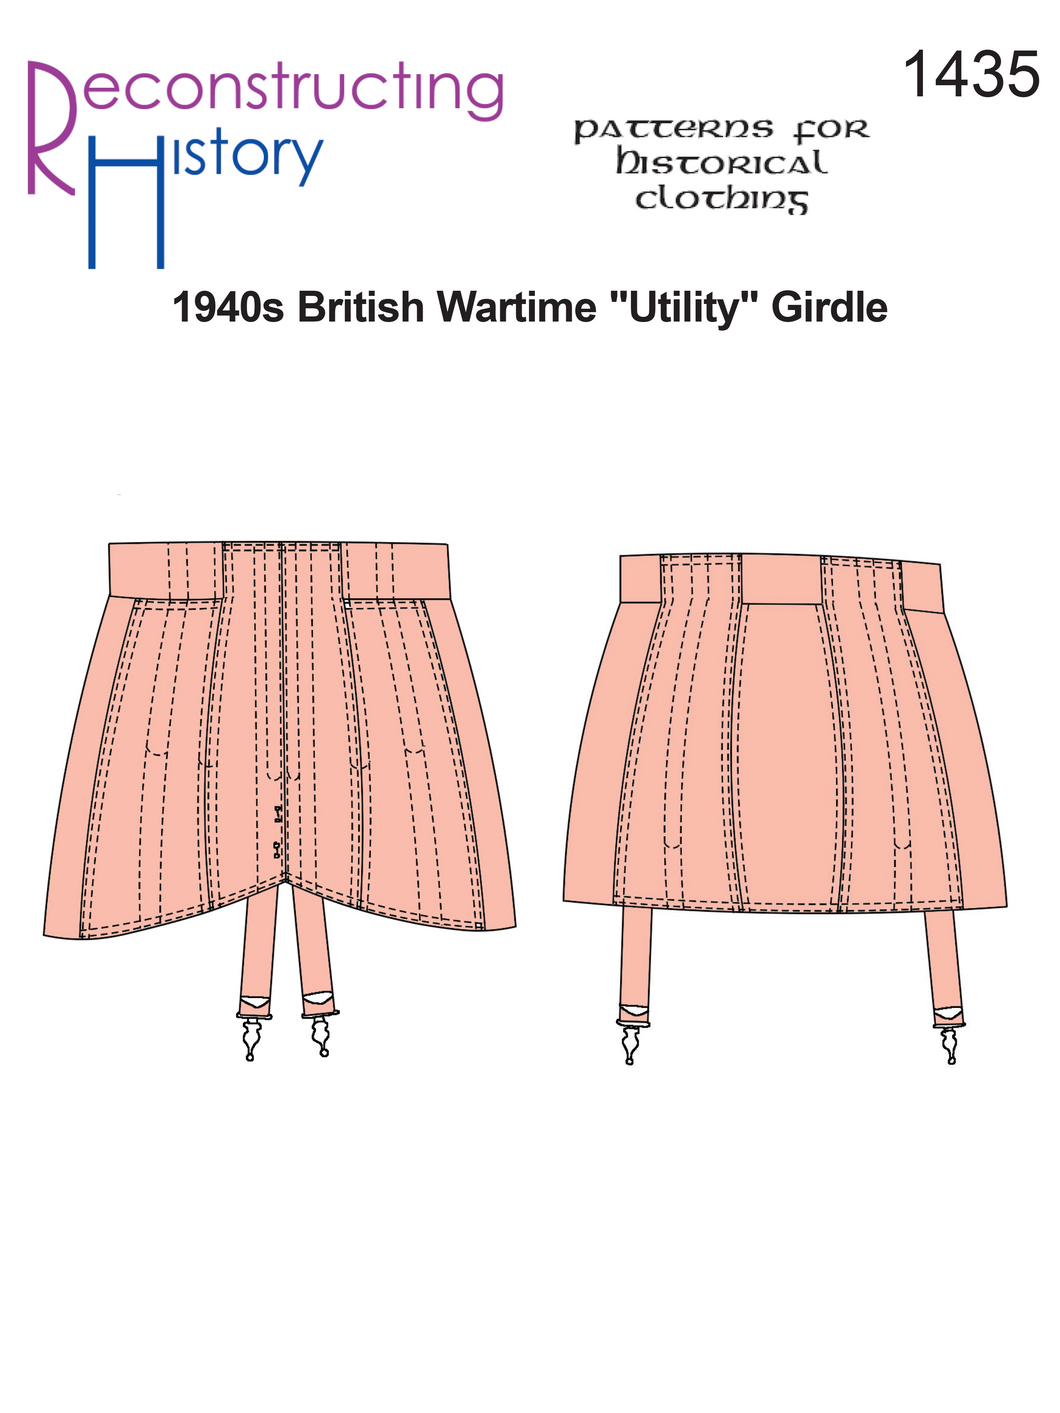 RH1435 — 1940s British Utility Girdle sewing pattern